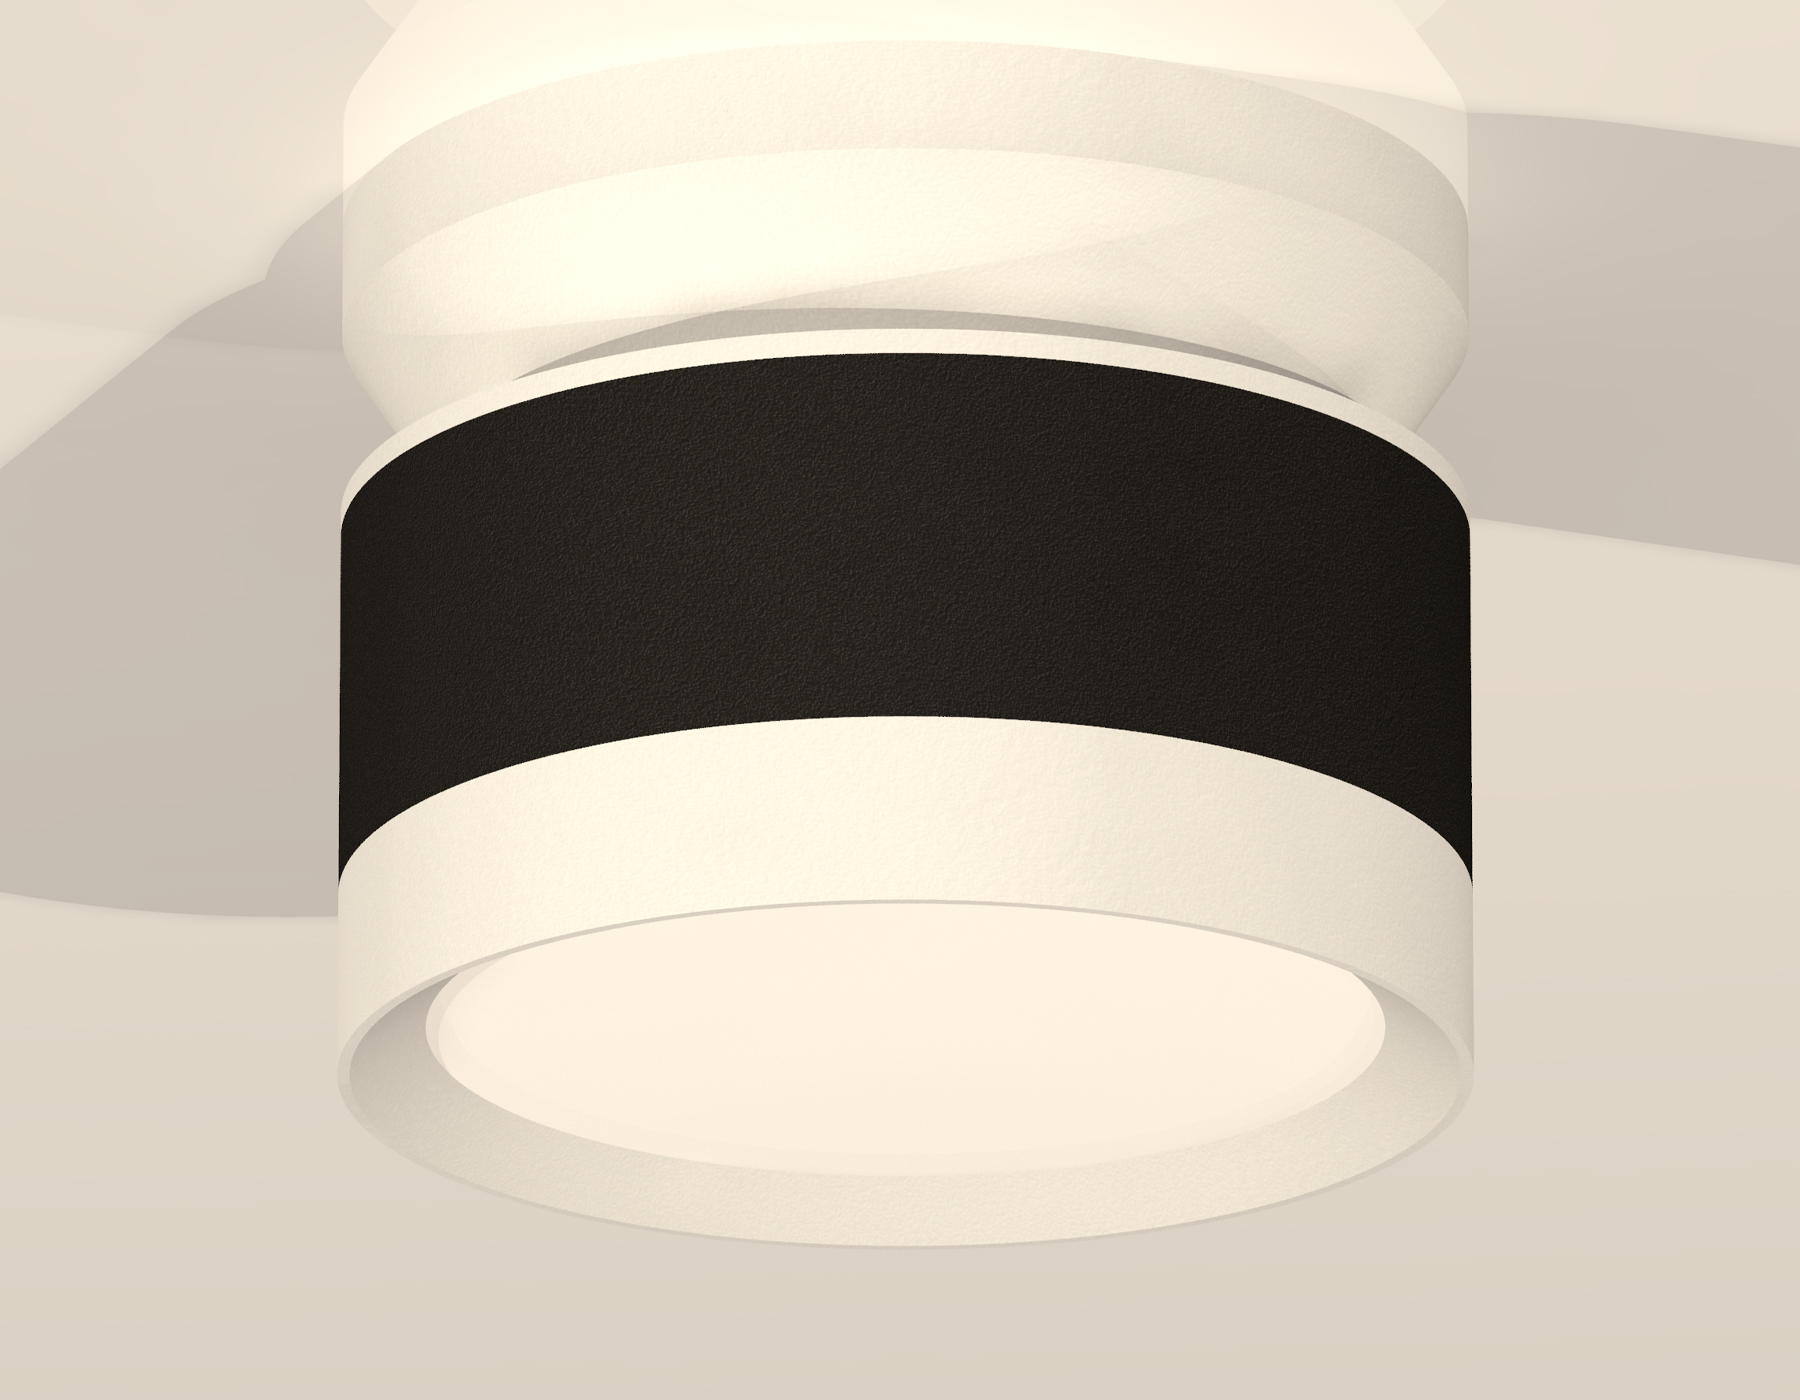 Потолочный светильник Ambrella Light Techno Spot XS8102045 (N8901, C8102, N8112)